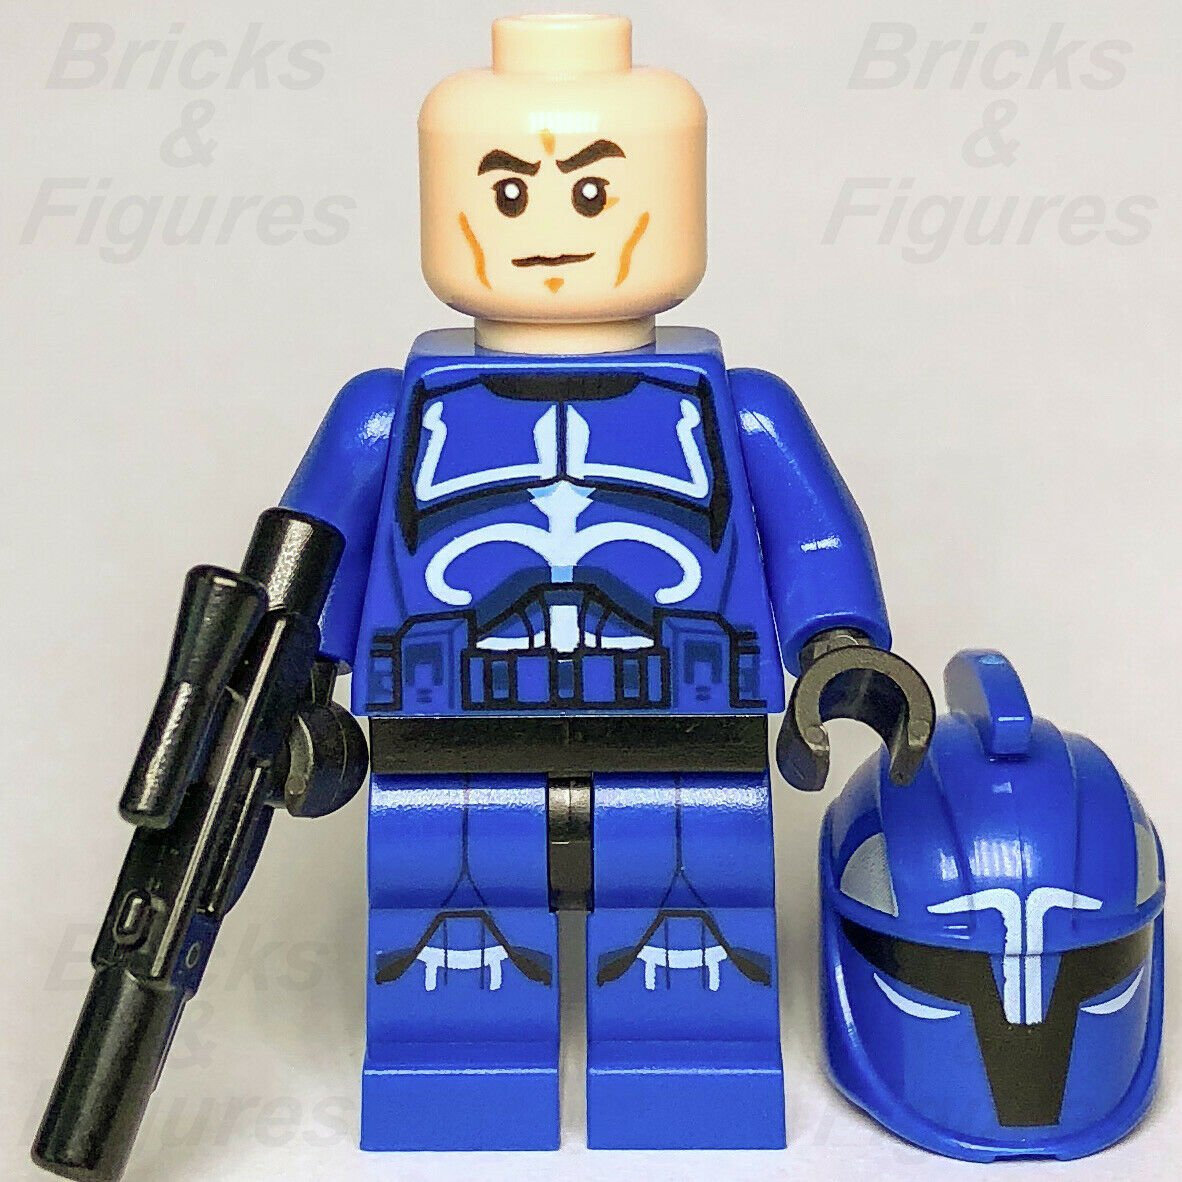 New Star Wars LEGO Senate Commando Captain Clone Wars Trooper Minifigure 75088 - Bricks & Figures